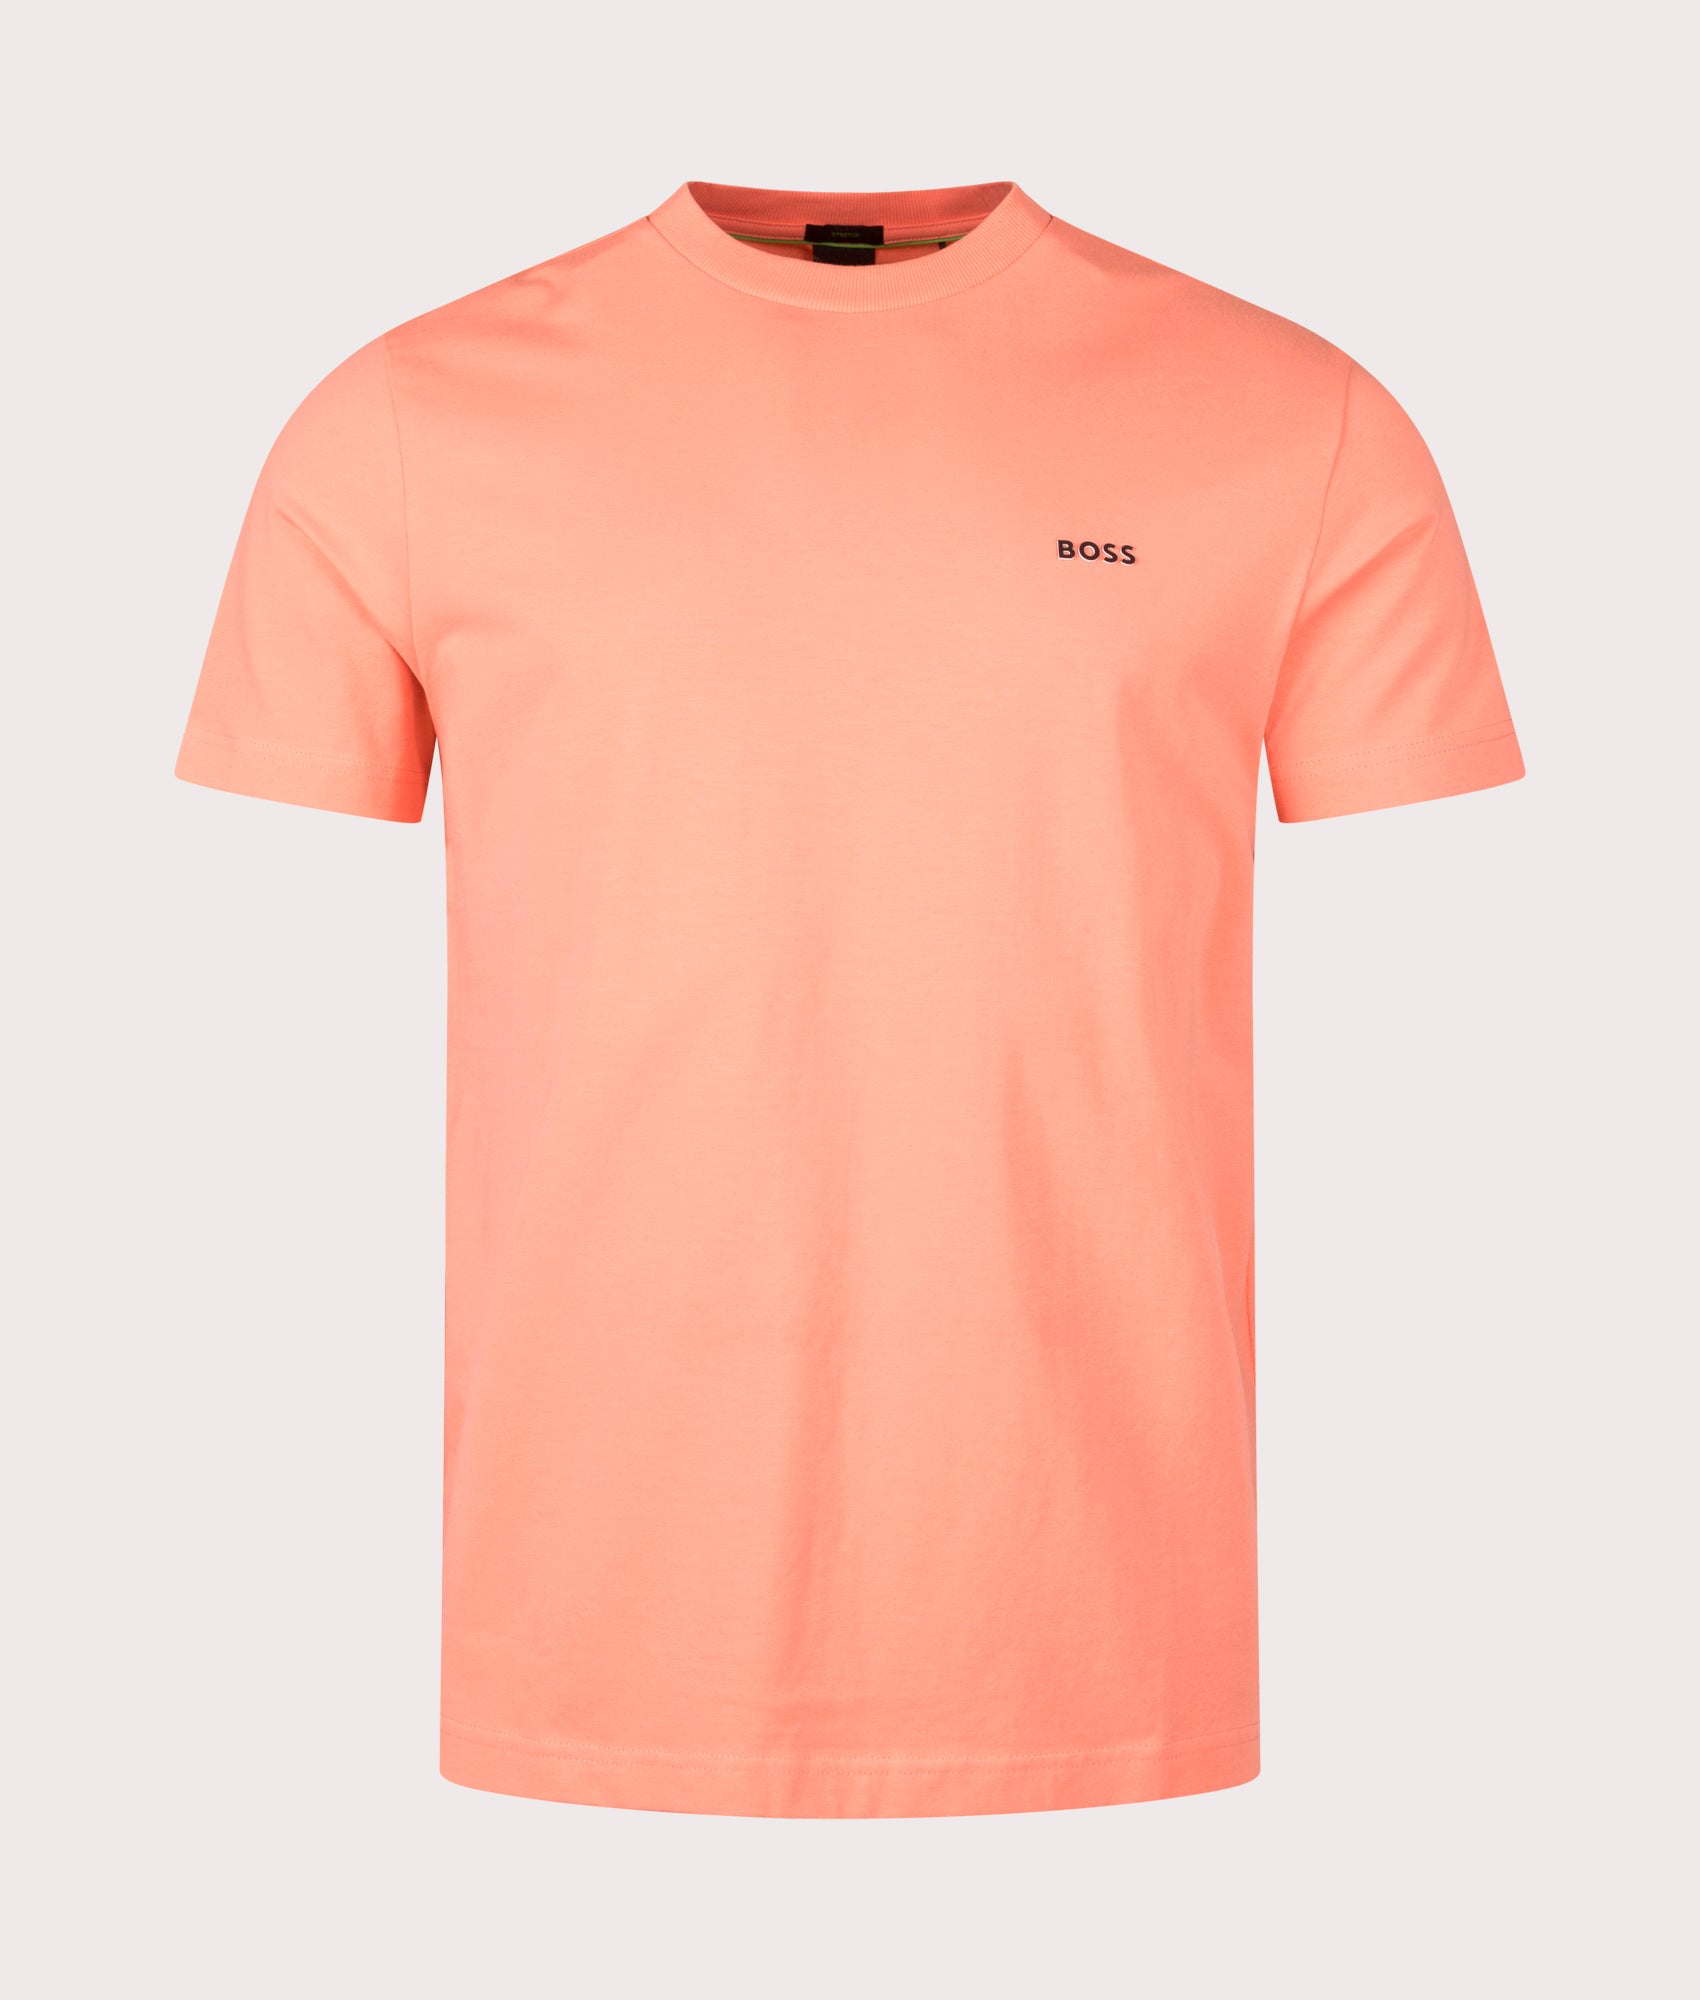 BOSS Mens Crew Neck Tee T-Shirt - Colour: 649 Open Red - Size: XXL